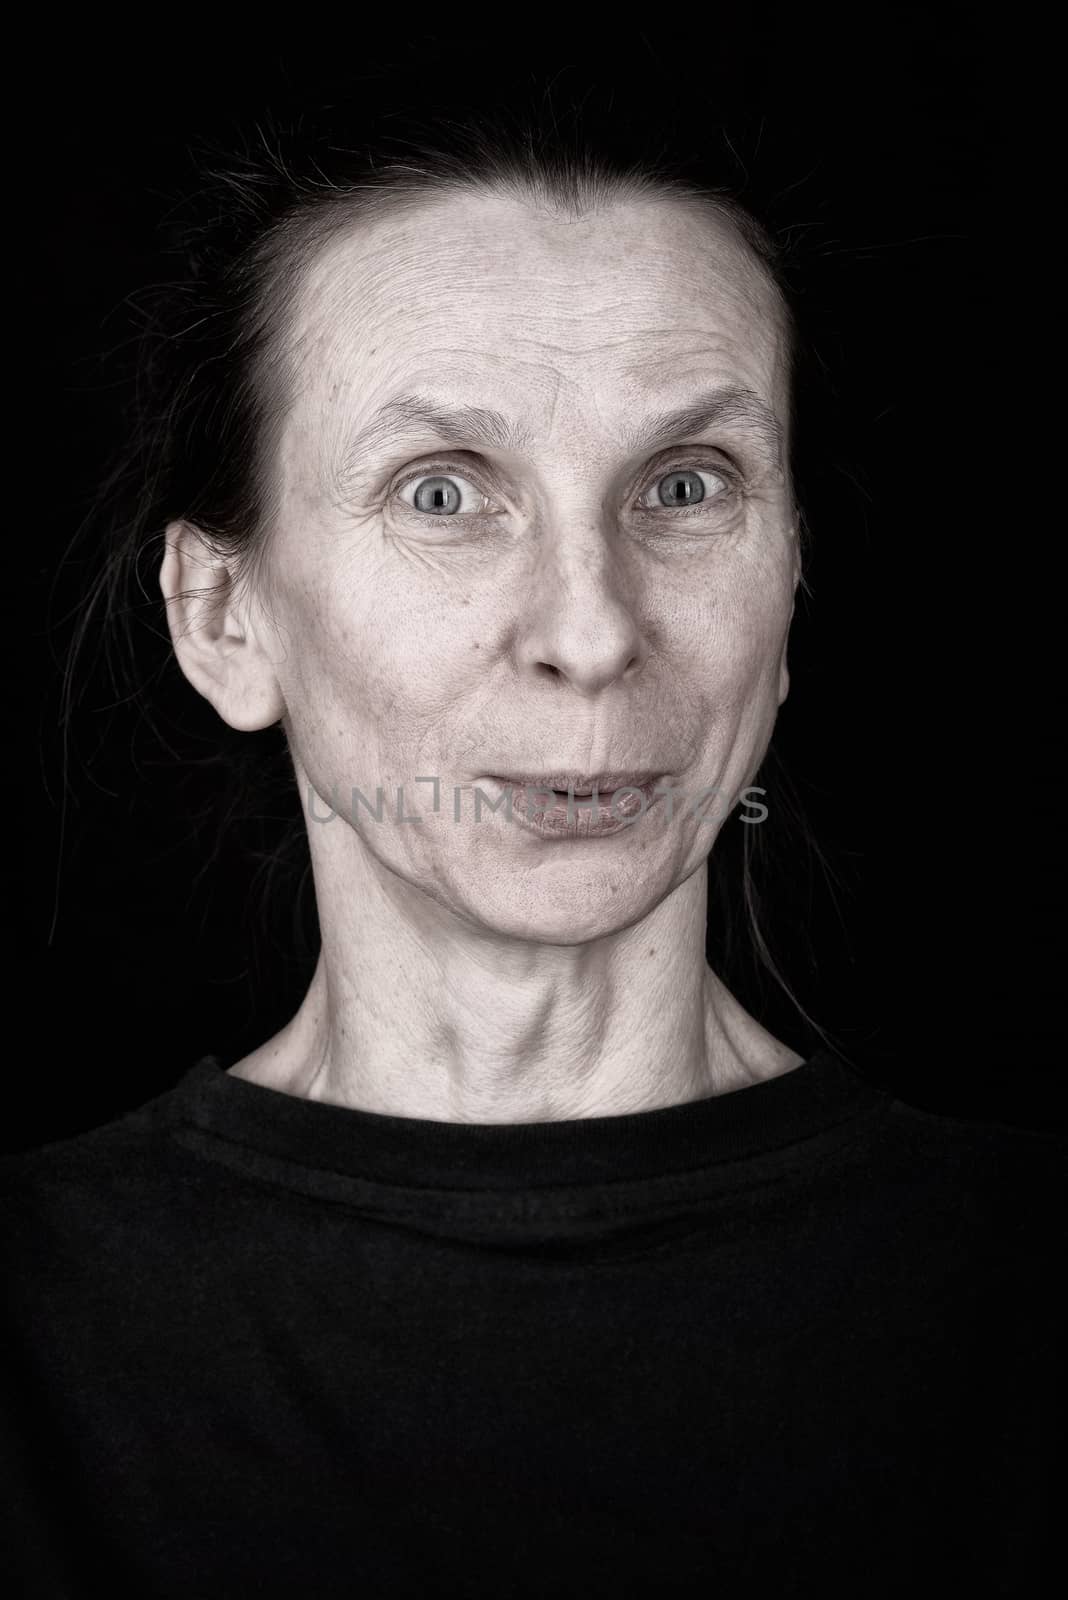 Apreciative Adult Woman Expression Portrait by MaxalTamor